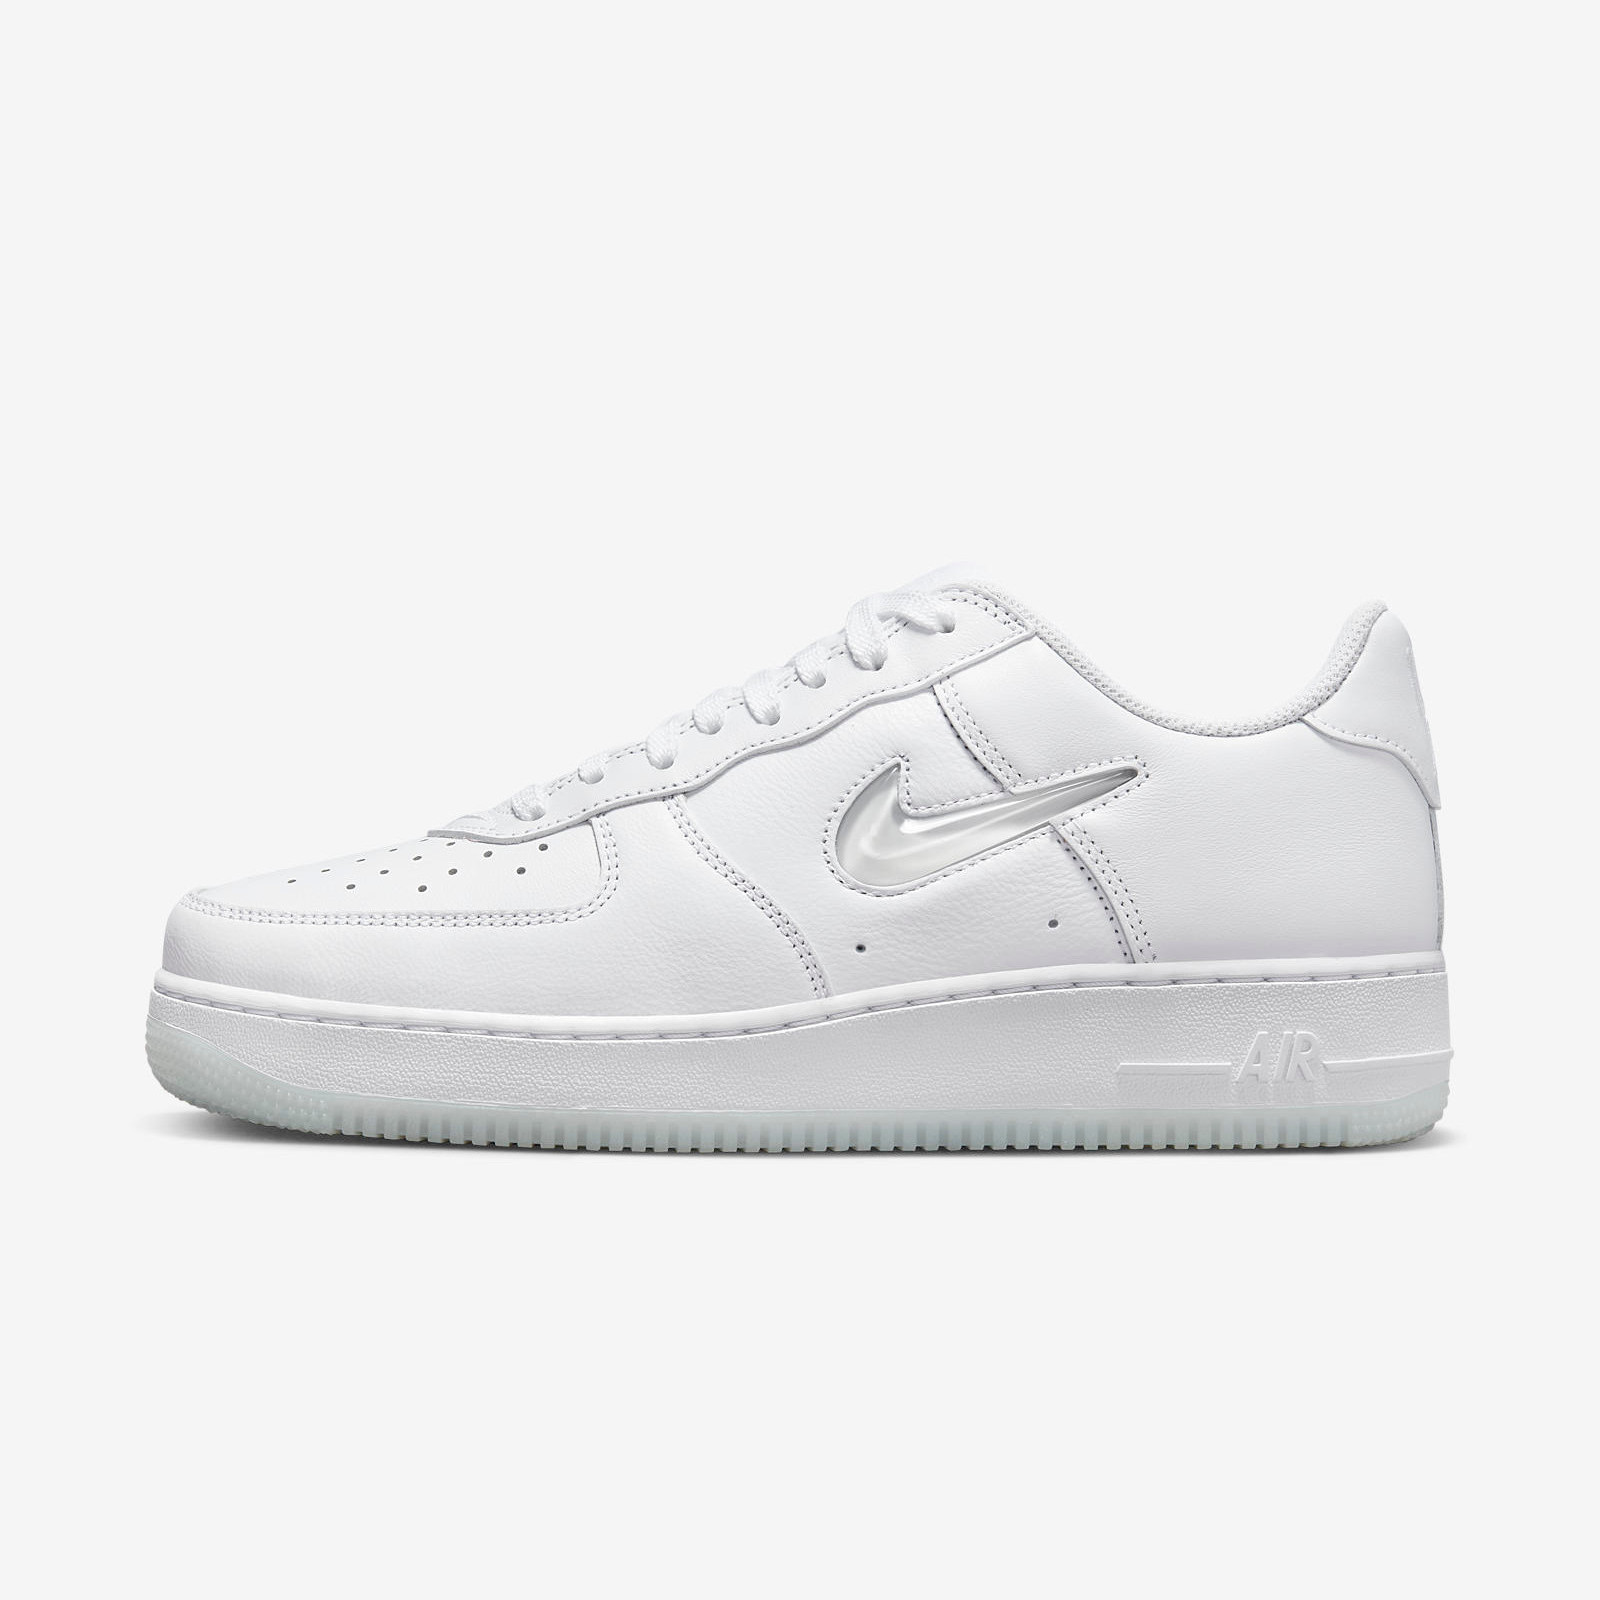 Nike Air Force 1
« White »